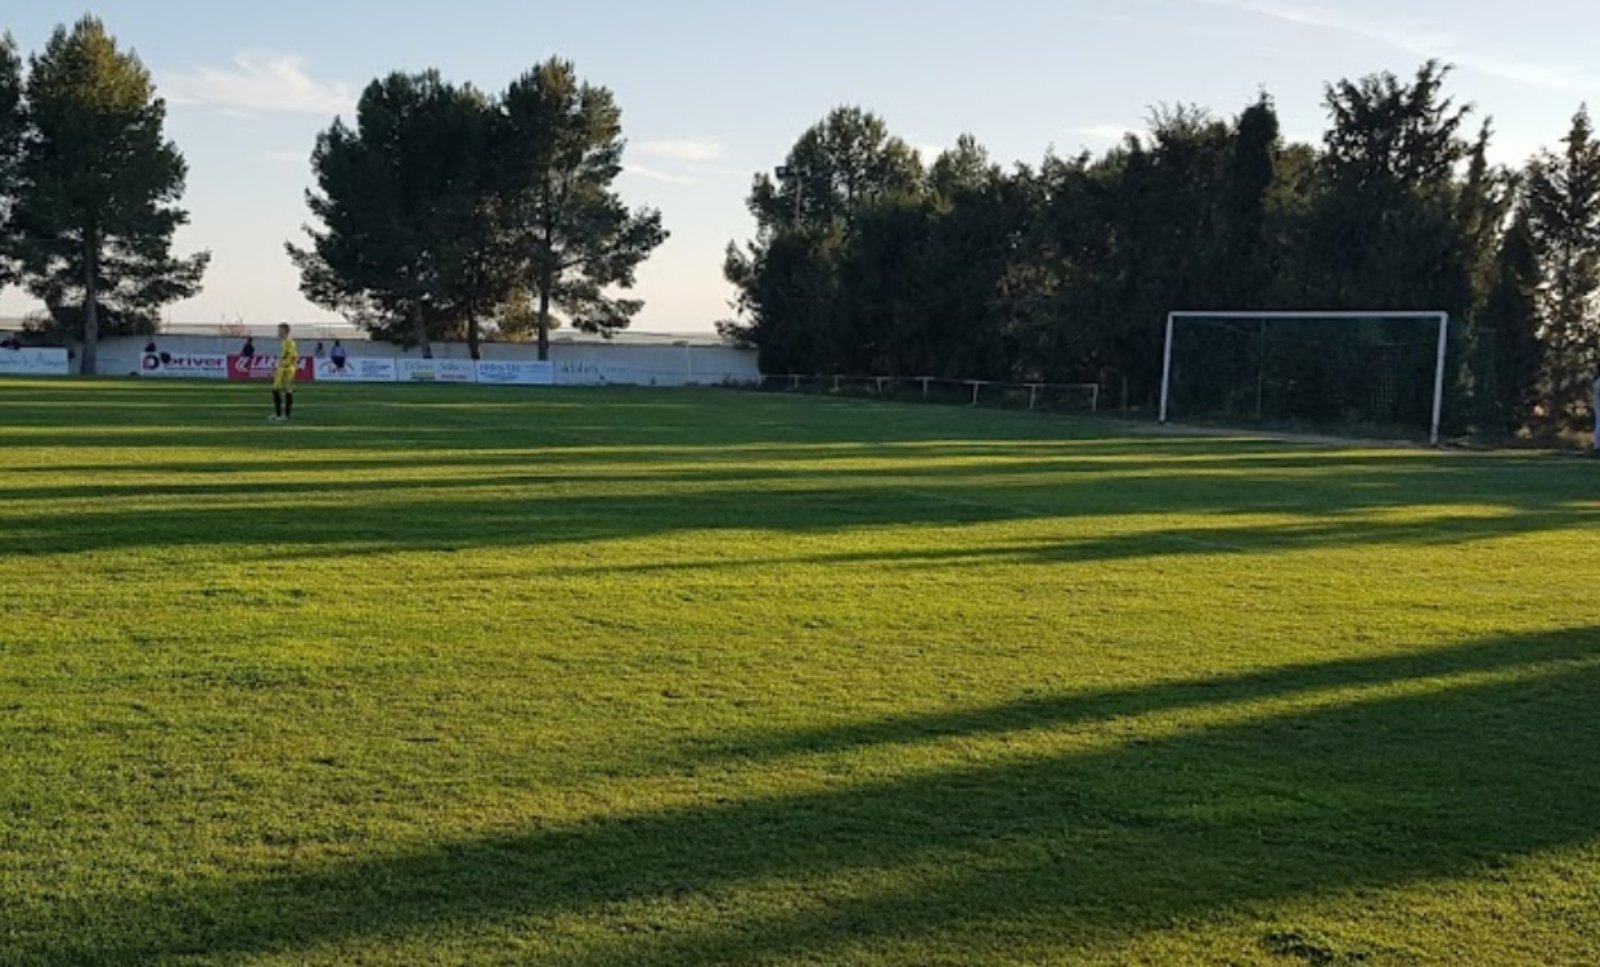 Camp de futbol Bujaraloz